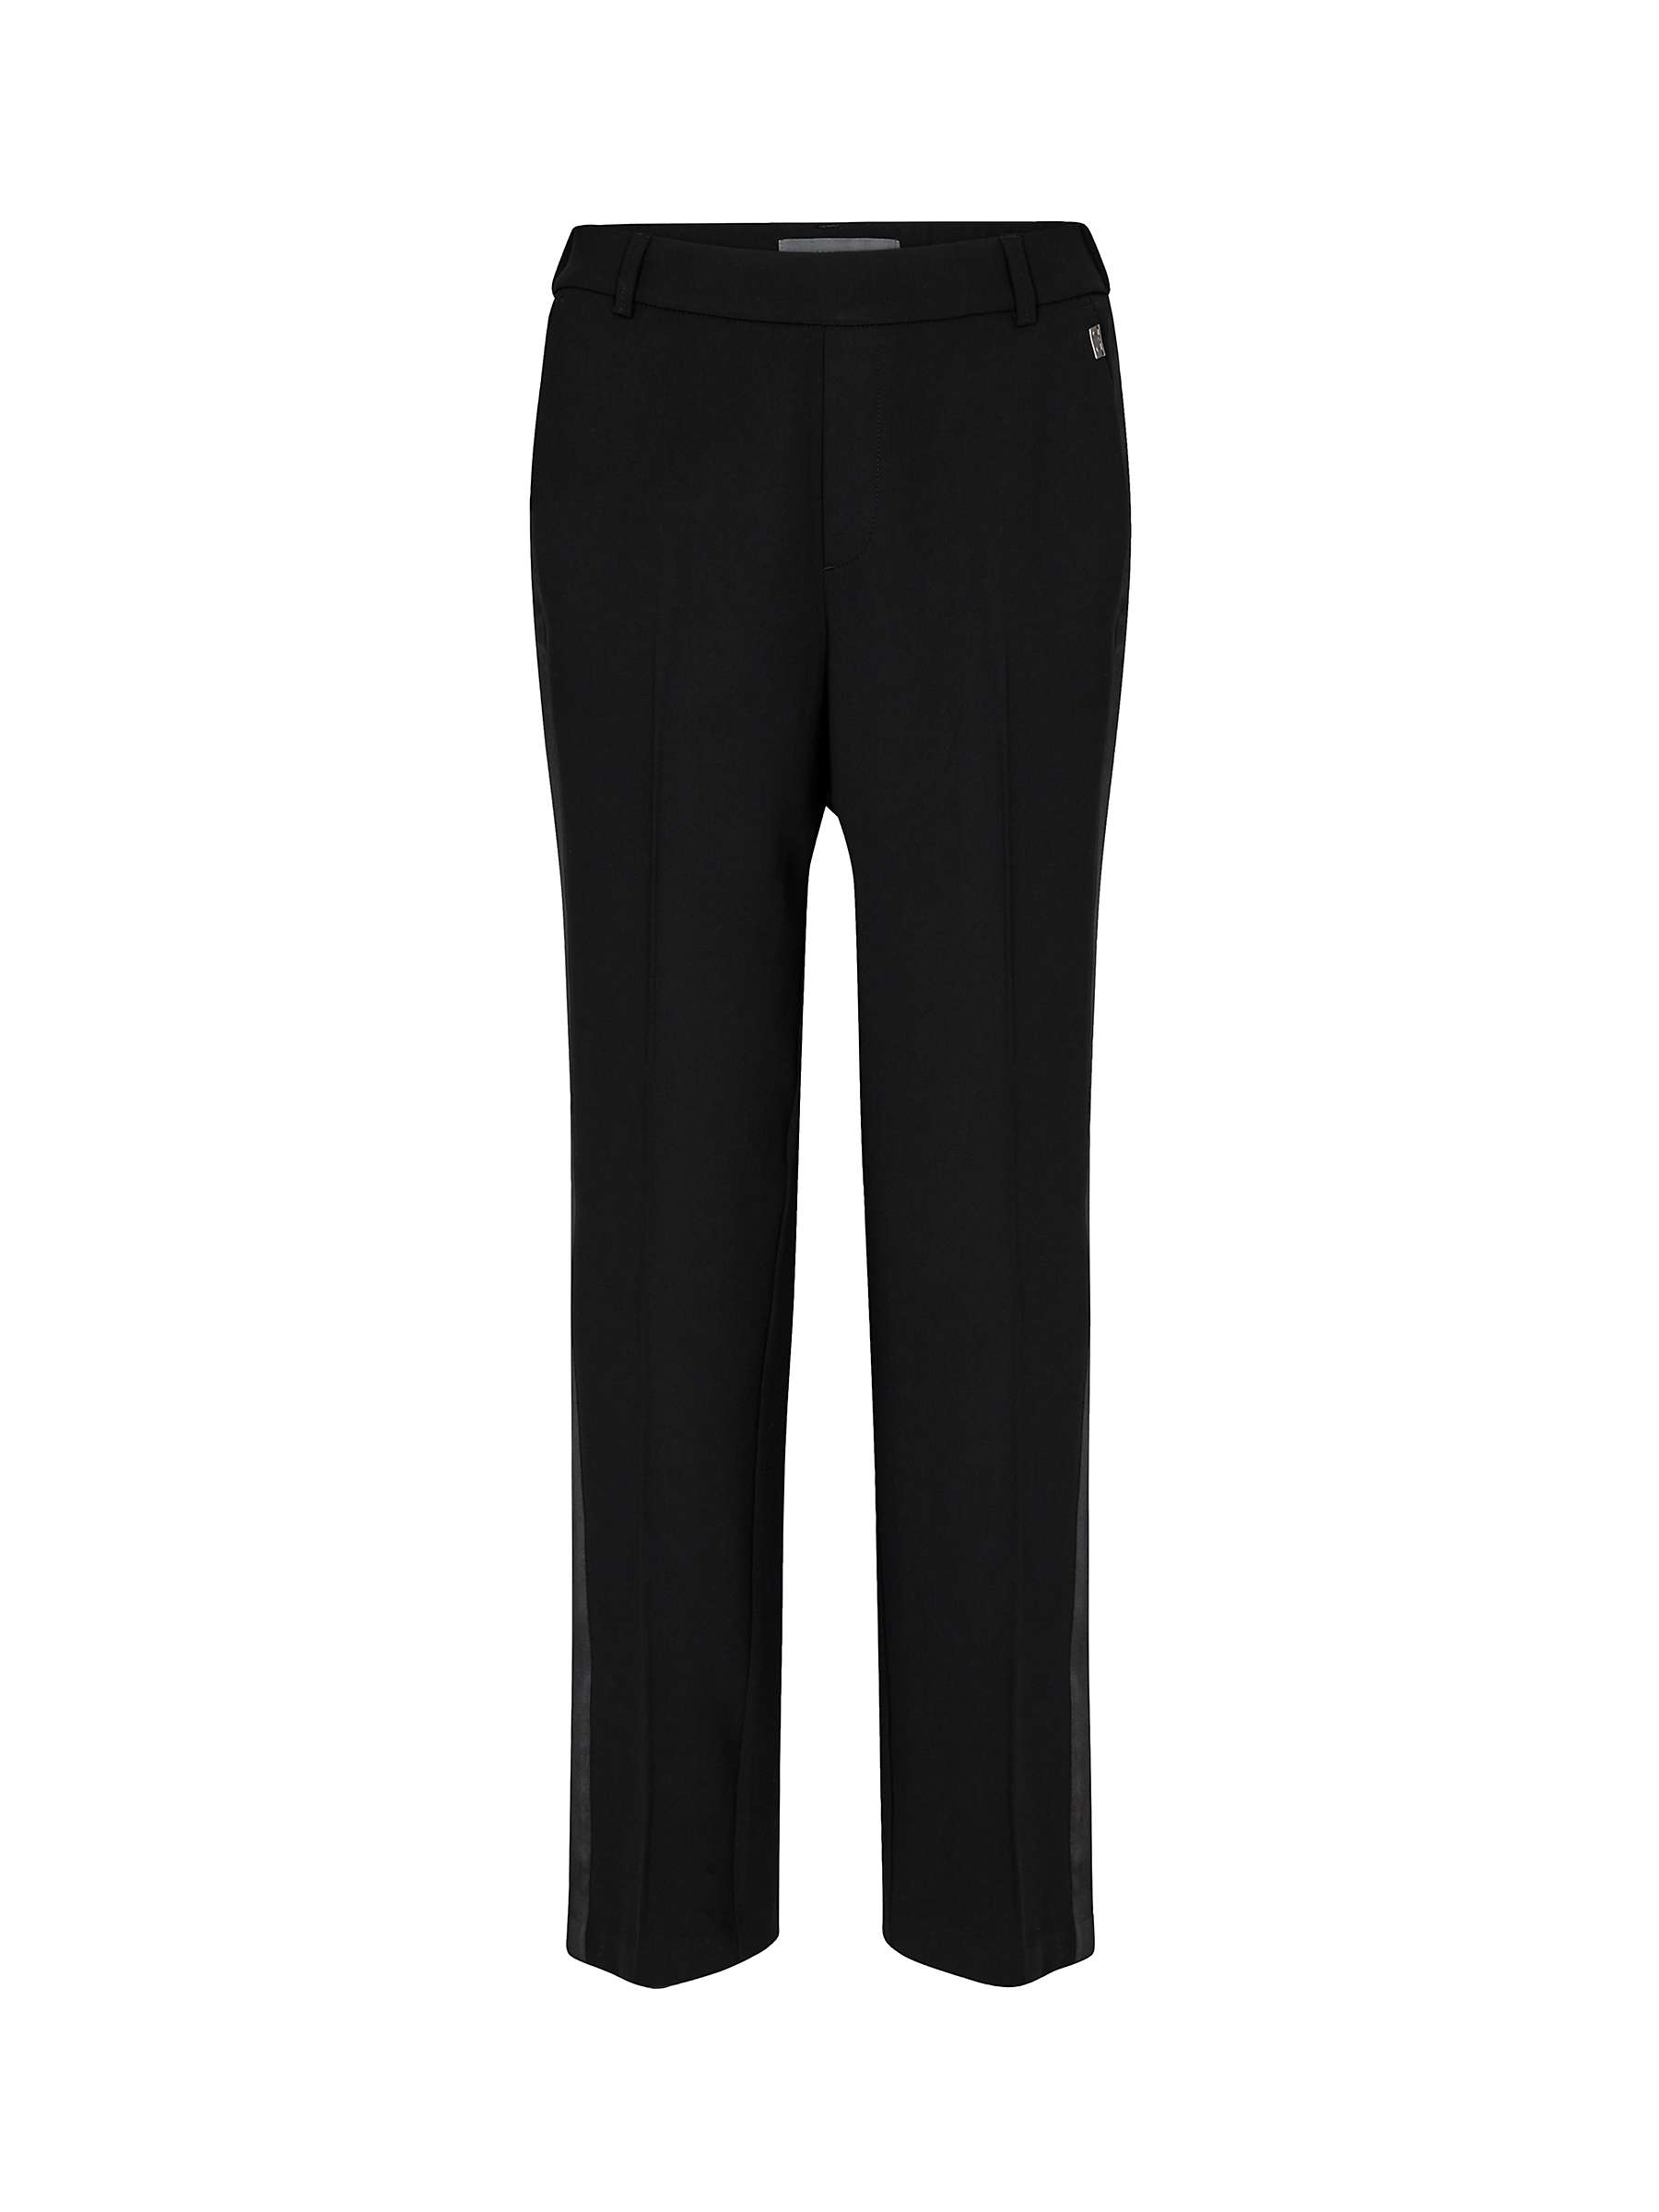 Buy MOS MOSH Bai Leia Soft Pull On Trousers, Black Online at johnlewis.com